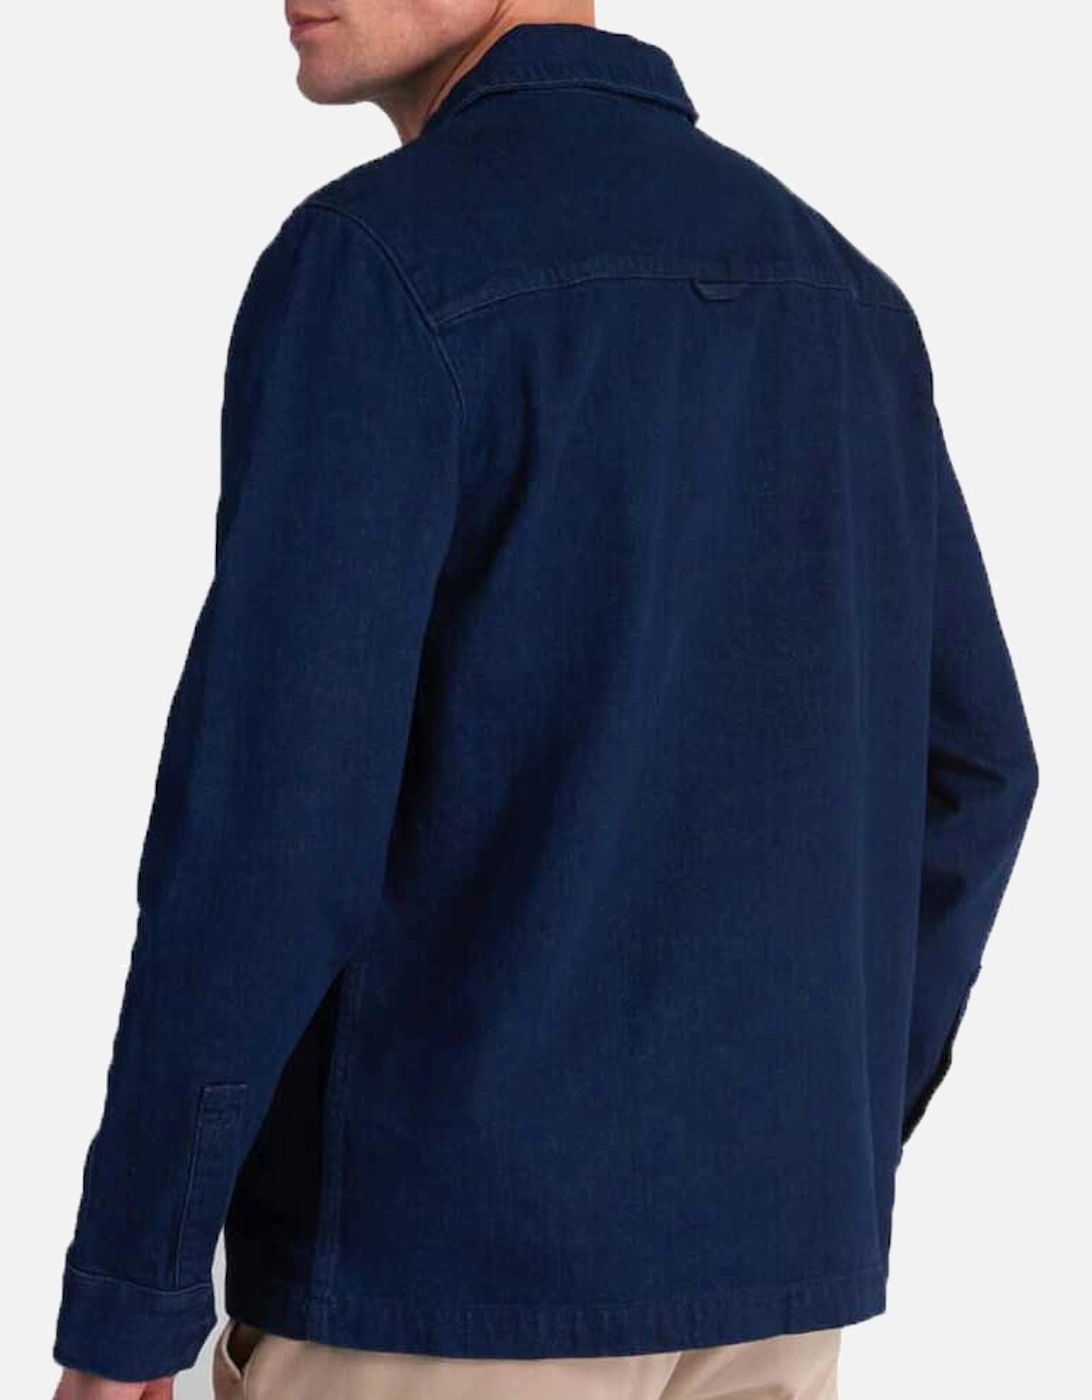 Indigo Blue Long Sleeve Shirt - Quarter Zip Overshirt